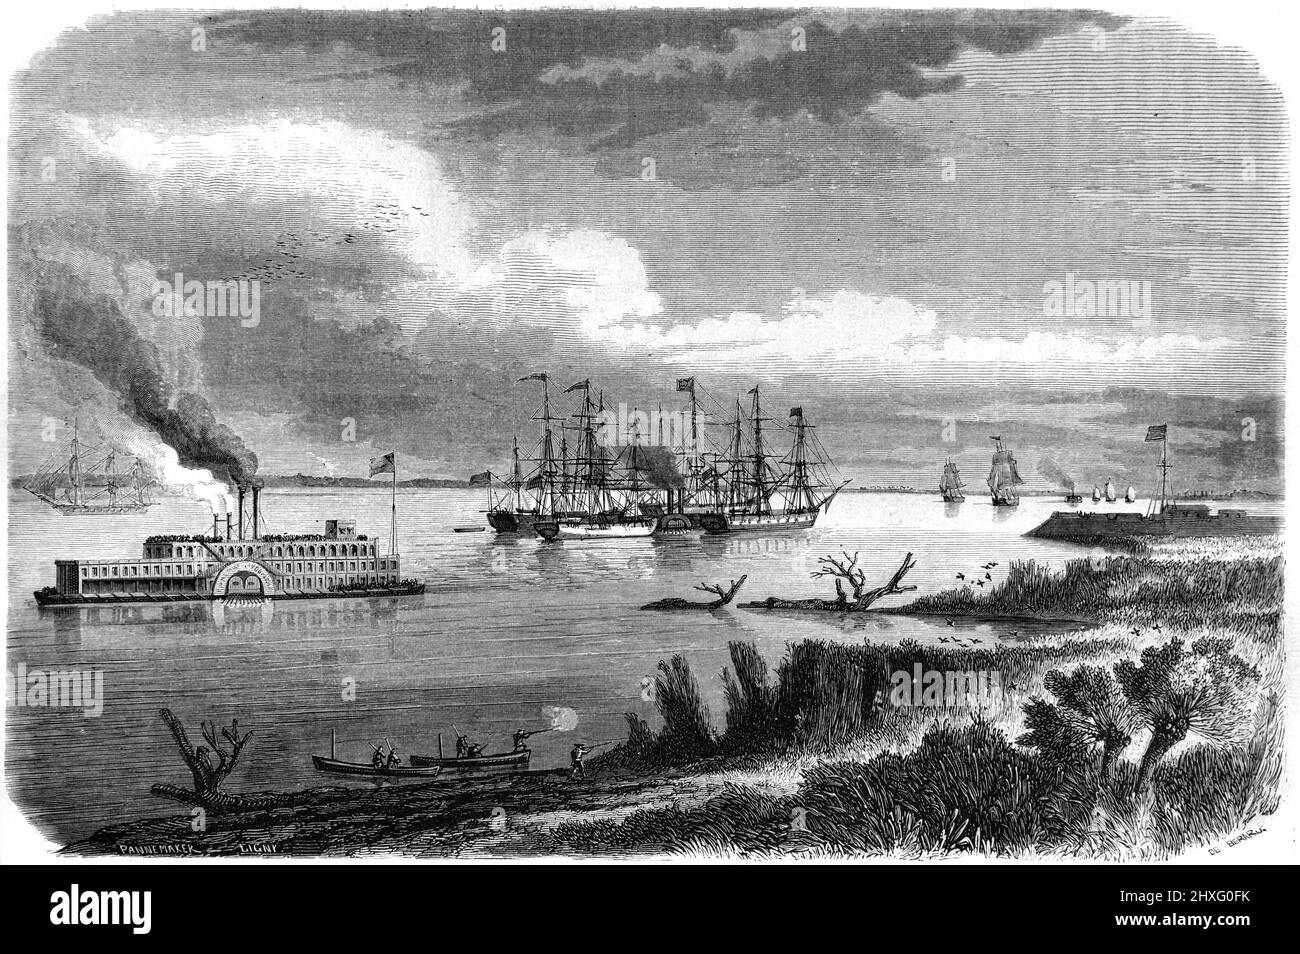 Paddeldampfer und hohe Holzschiffe auf dem Mississippi River USA, USA oder USA. Vintage Illustration oder Gravur 1860. Stockfoto